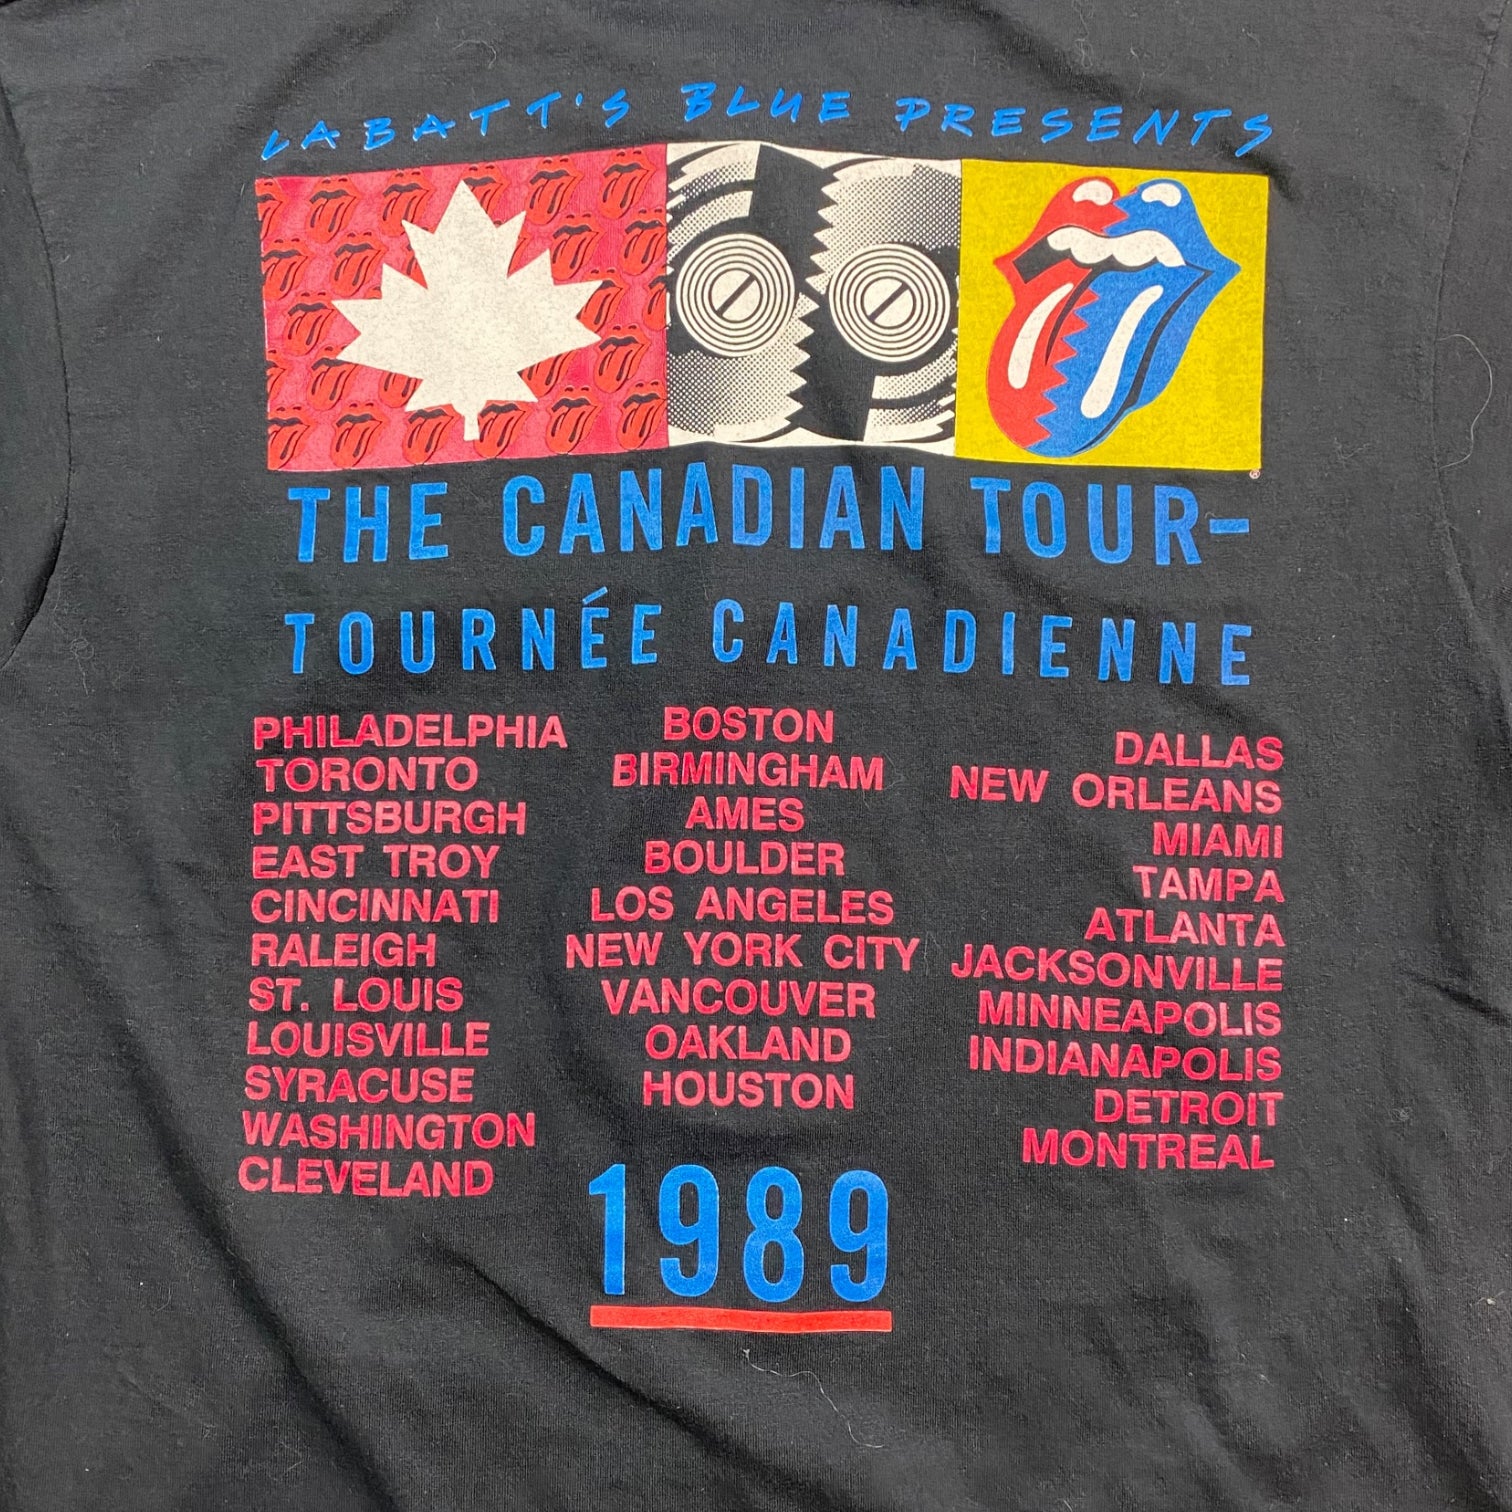 1989 Timeless Rock Classics Rolling Stones Steel Wheels Black T-Shirt